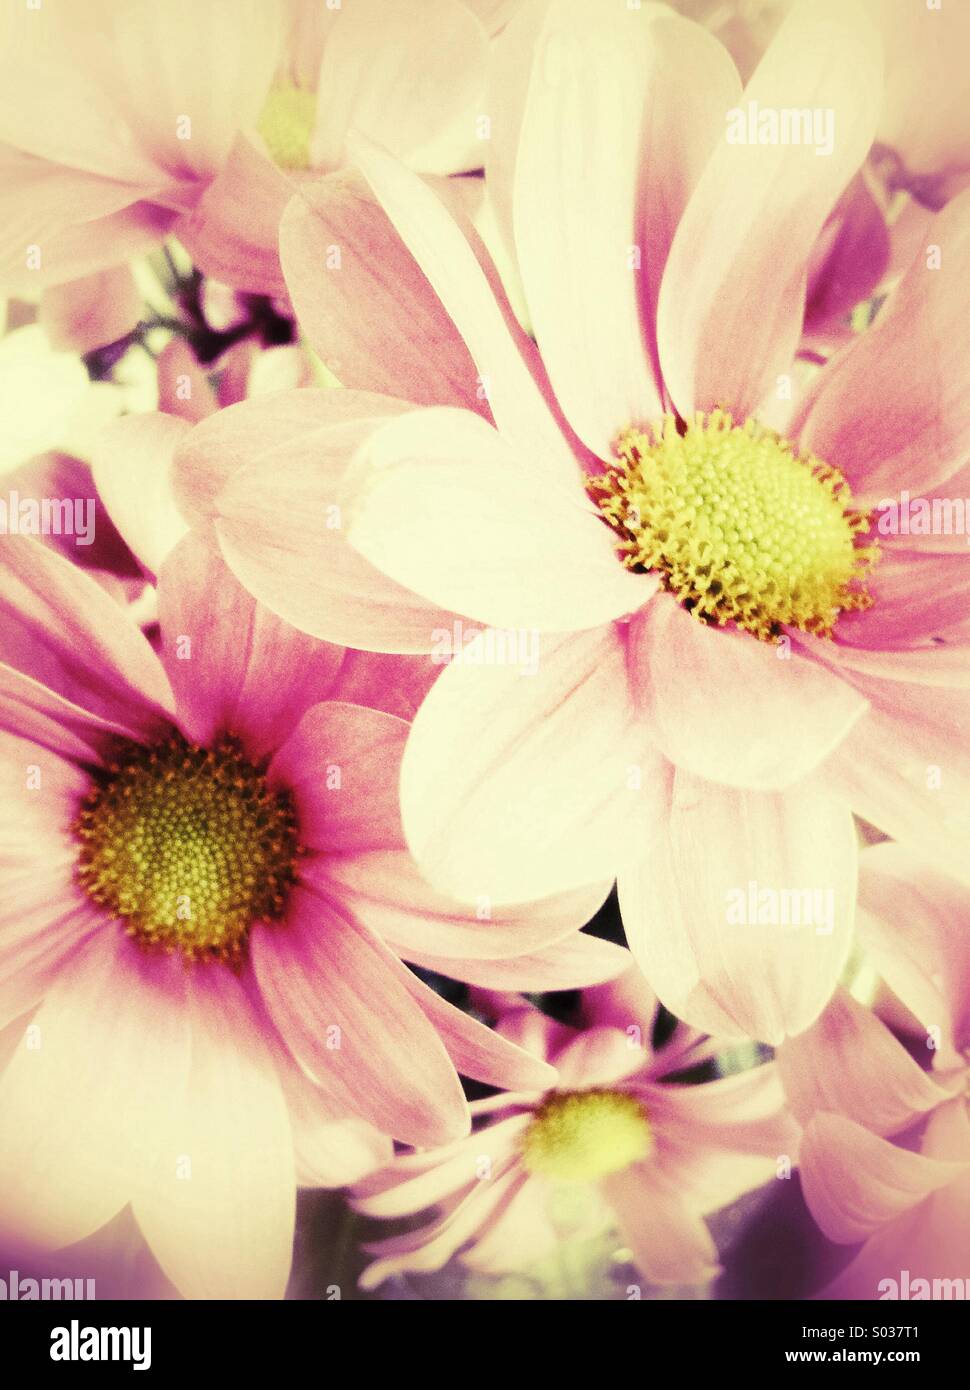 Rosa Chrysanthemen Stockfoto